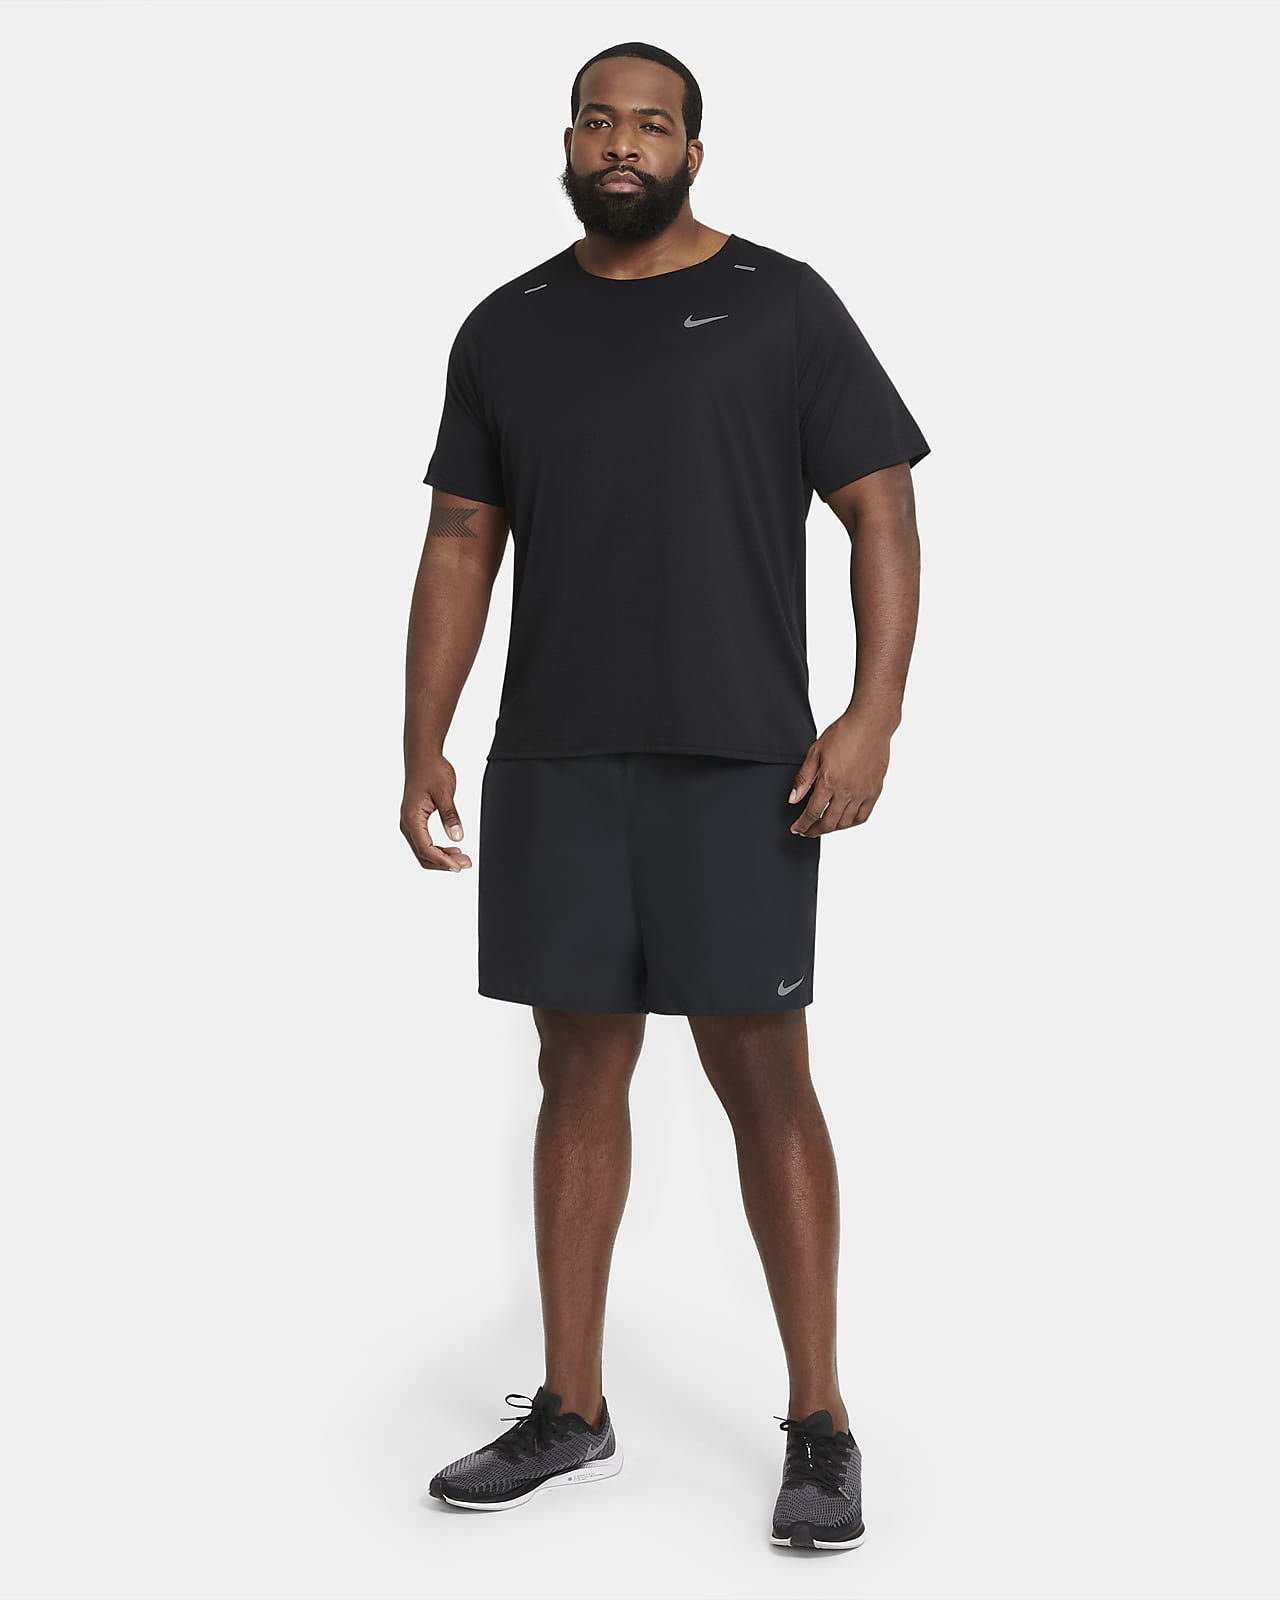 Nike Challenger Men's 5 Brief-Lined Running Shorts.